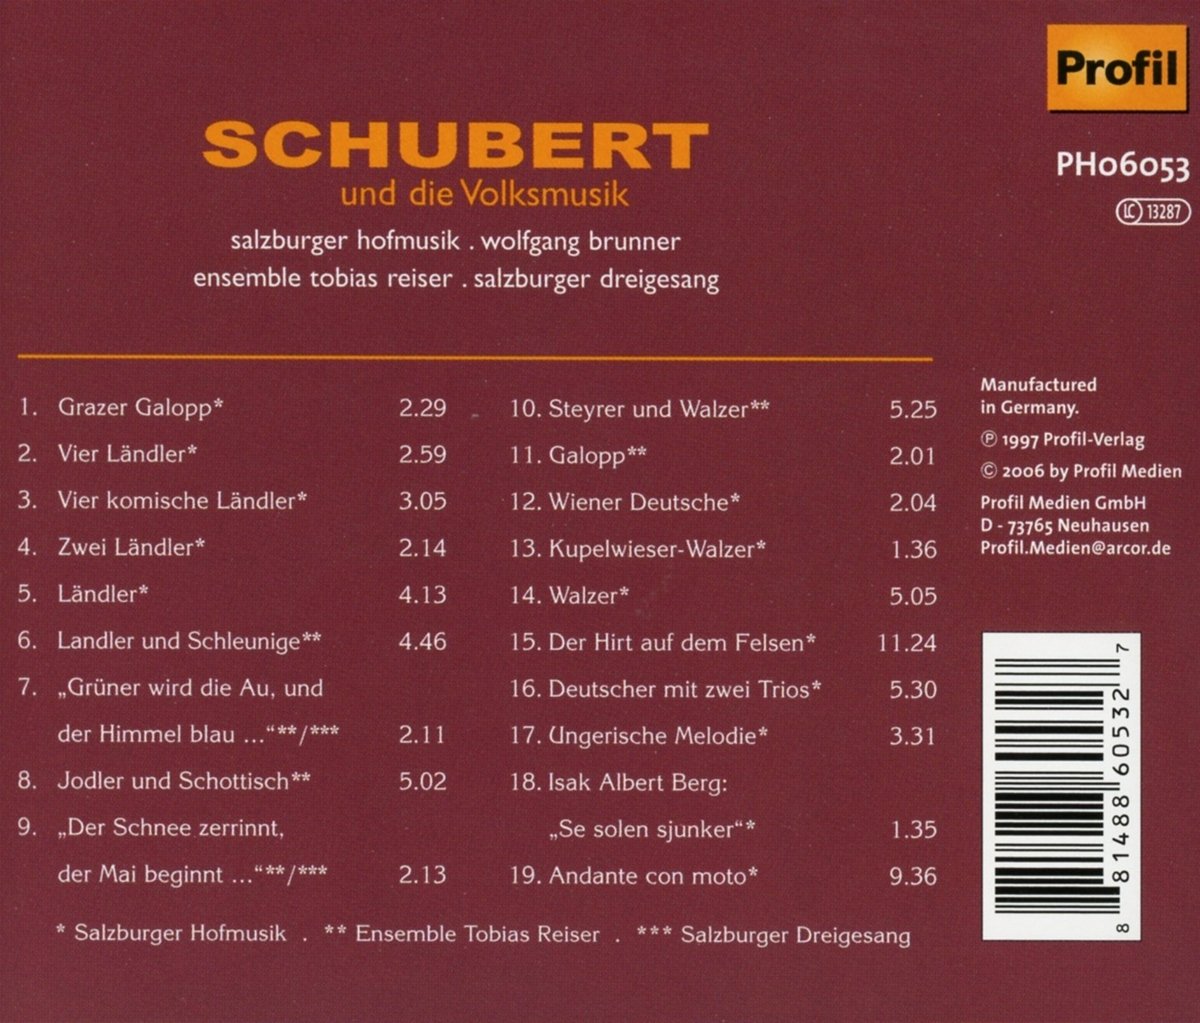 Wolfgang Brunner 슈베르트: 슈베르트와 민속음악 (Schubert : Schubert and The Folksmusic)  